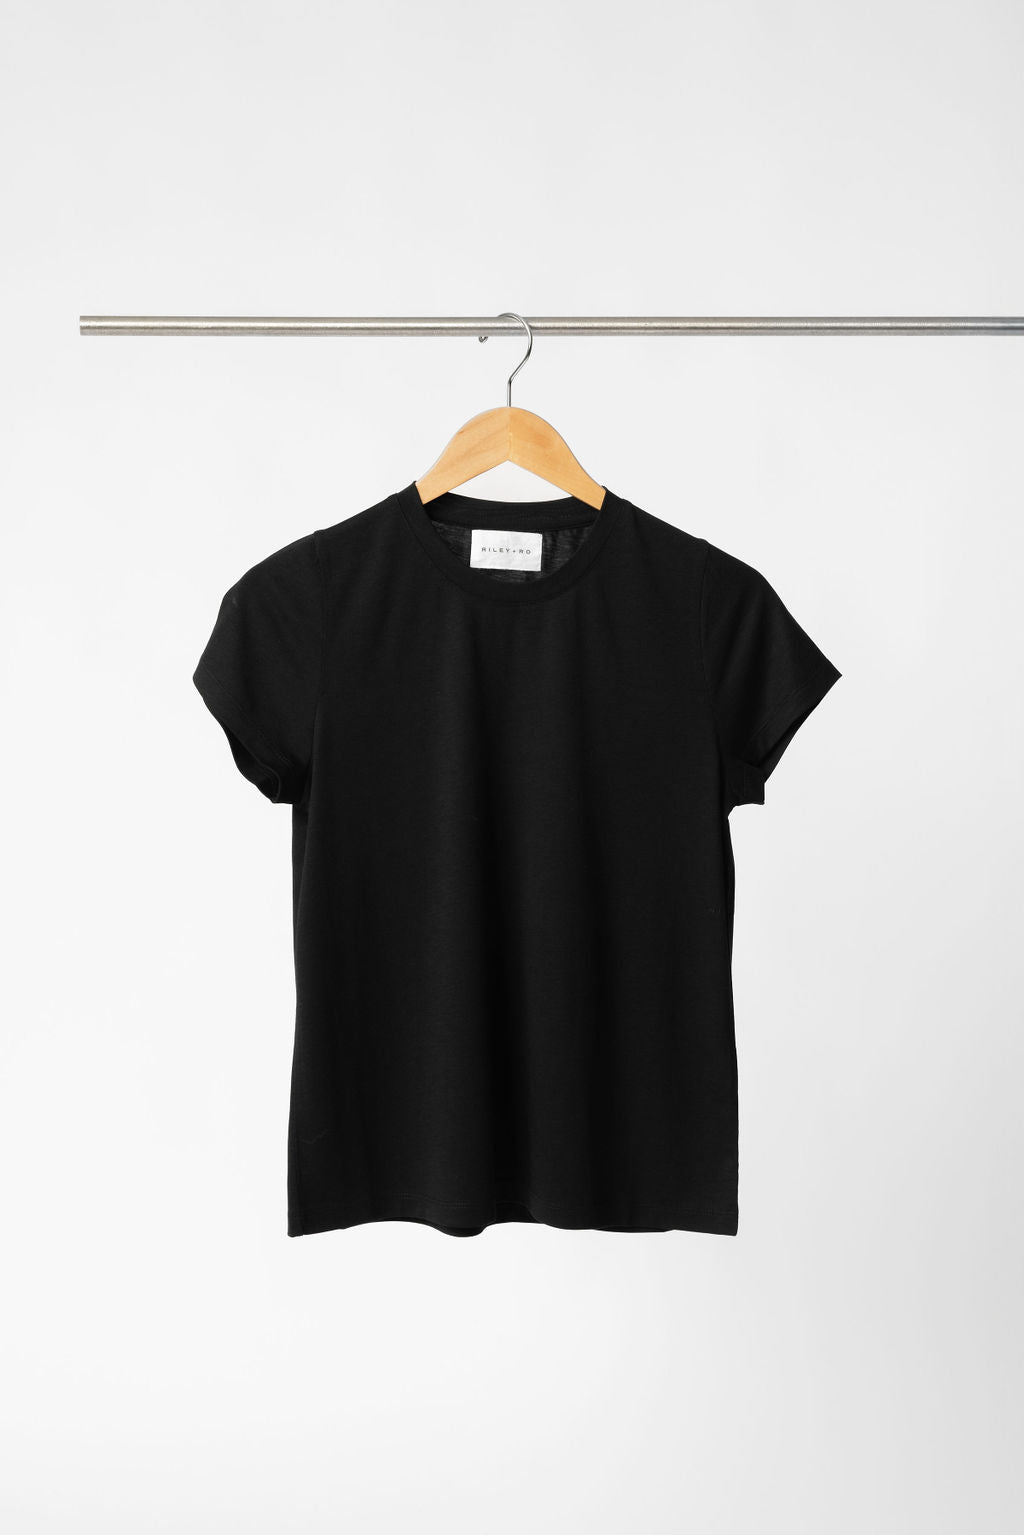 Minimalist Capsule Wardrobe 100% Organic Cotton Basic Black Tee on Hanger